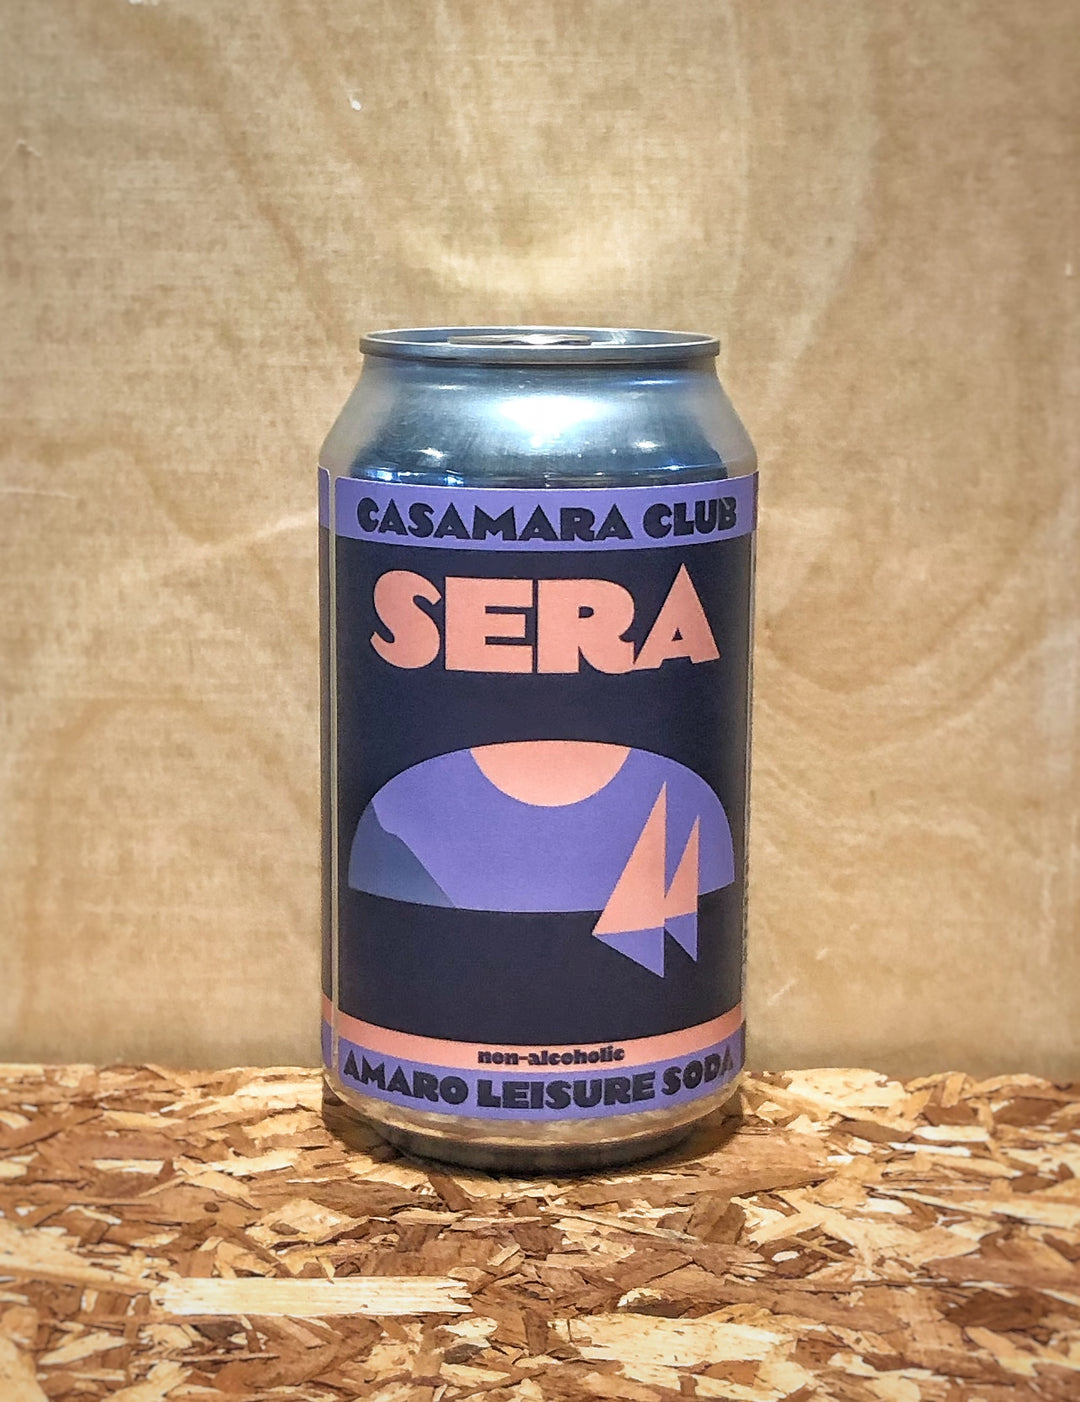 Casamara Club 'Sera' Non-Alcoholic Leisure Soda (Detroit, MI)